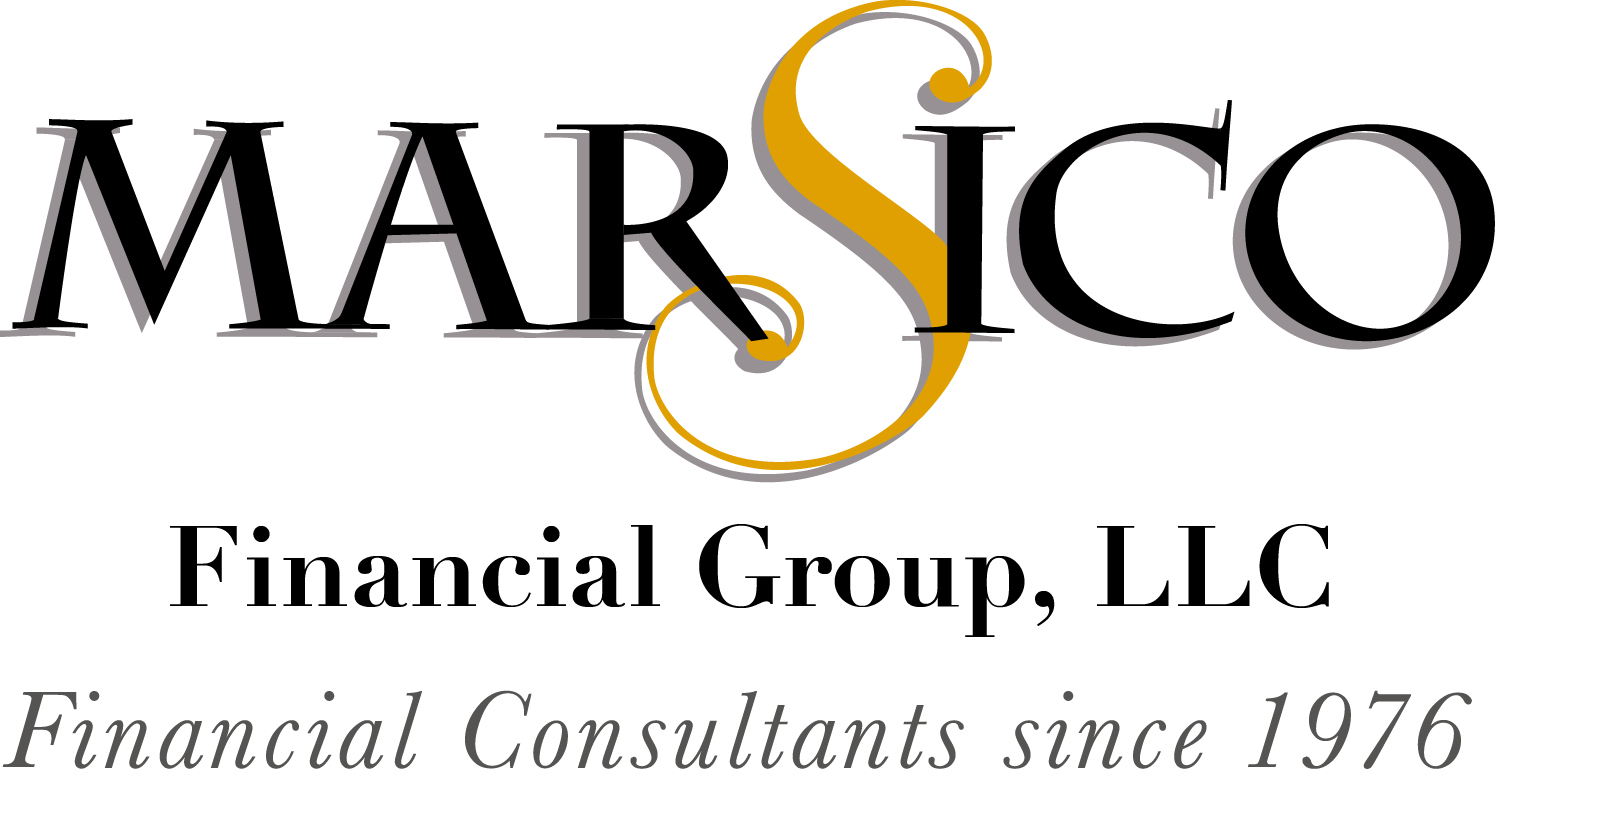 Marsico Financial Group, LLC 1018 Pittsburgh Rd, Valencia Pennsylvania 16059